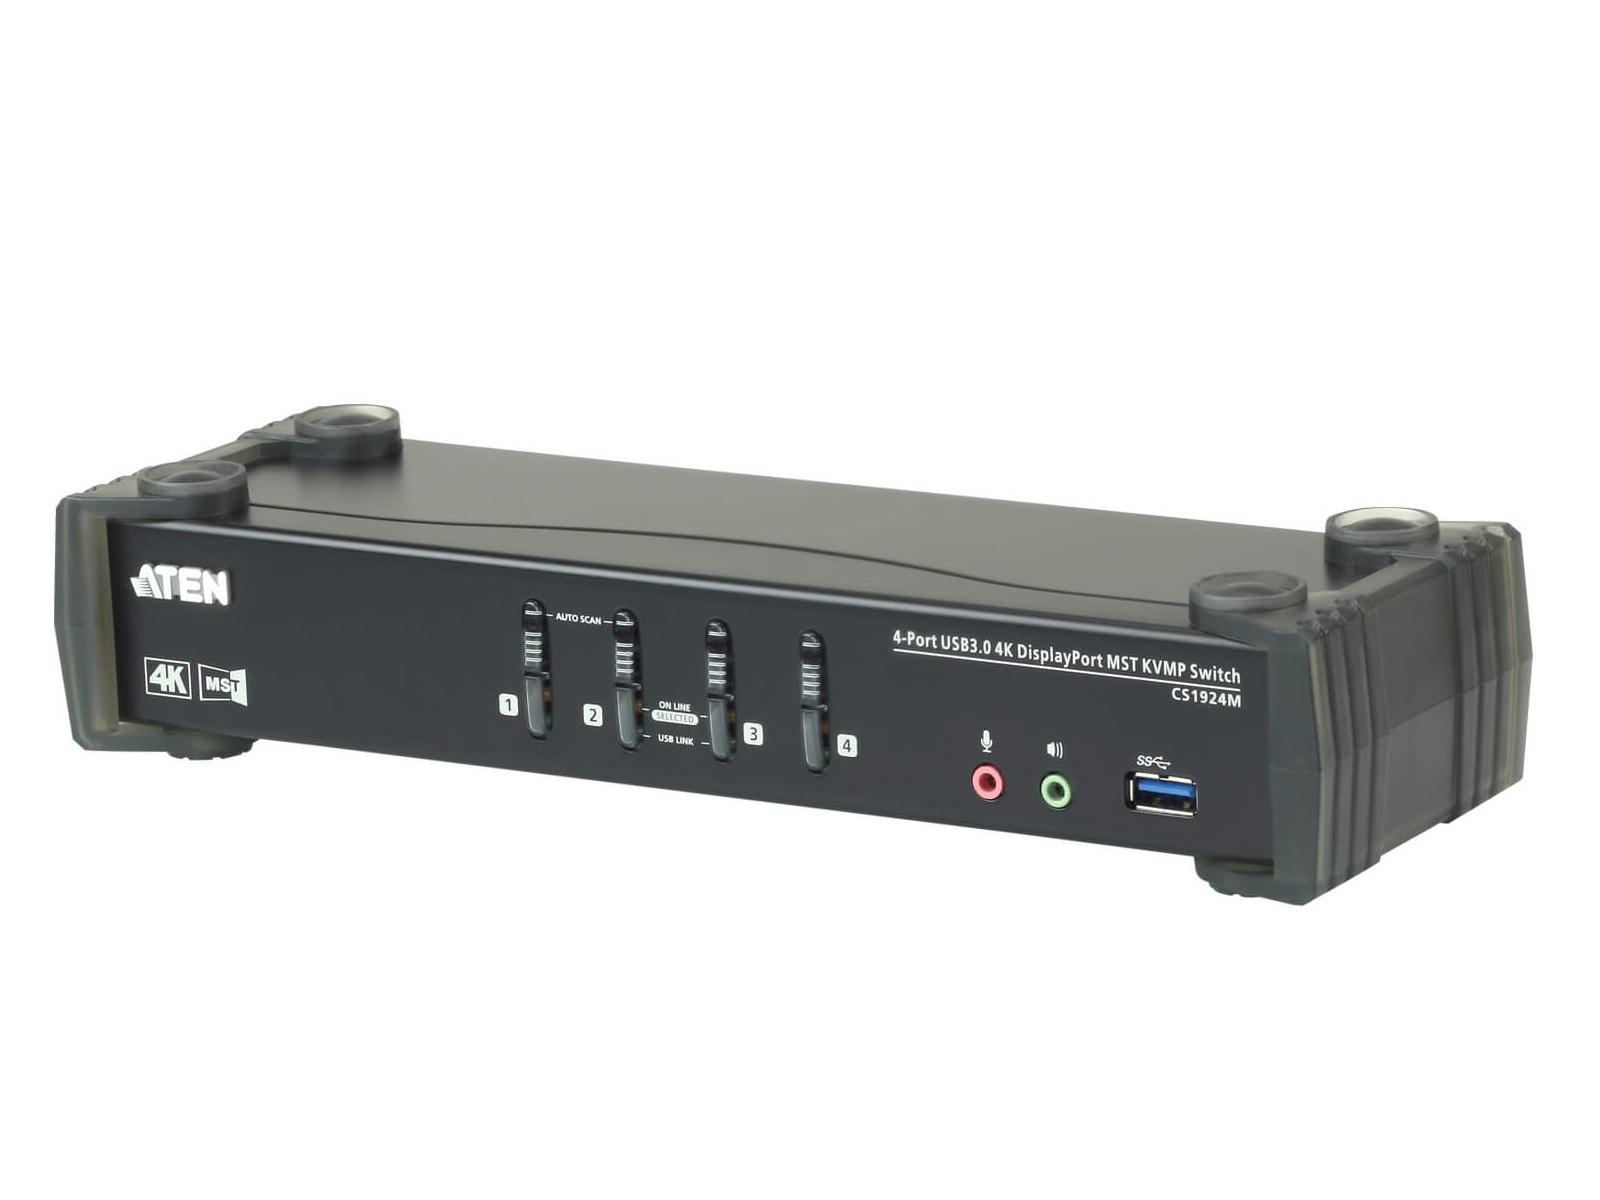 CS1924M 4-Port USB 3.0 4K DisplayPort MST KVMP Switch by Aten